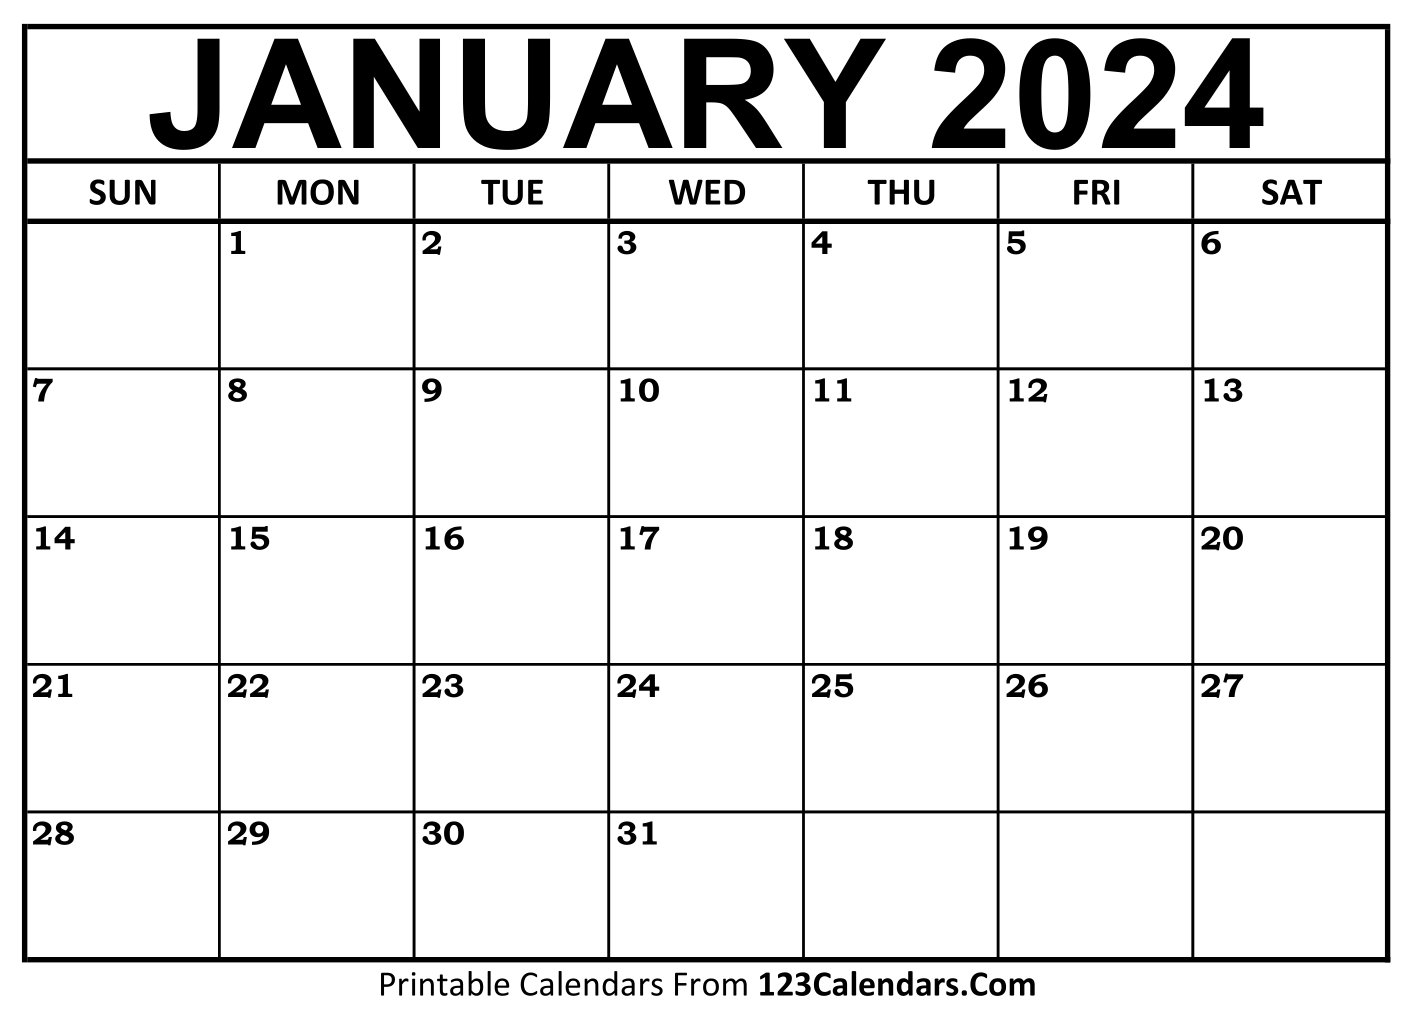 Printable January 2024 Calendar Templates - 123Calendars for Free January Printable Calendar 2024